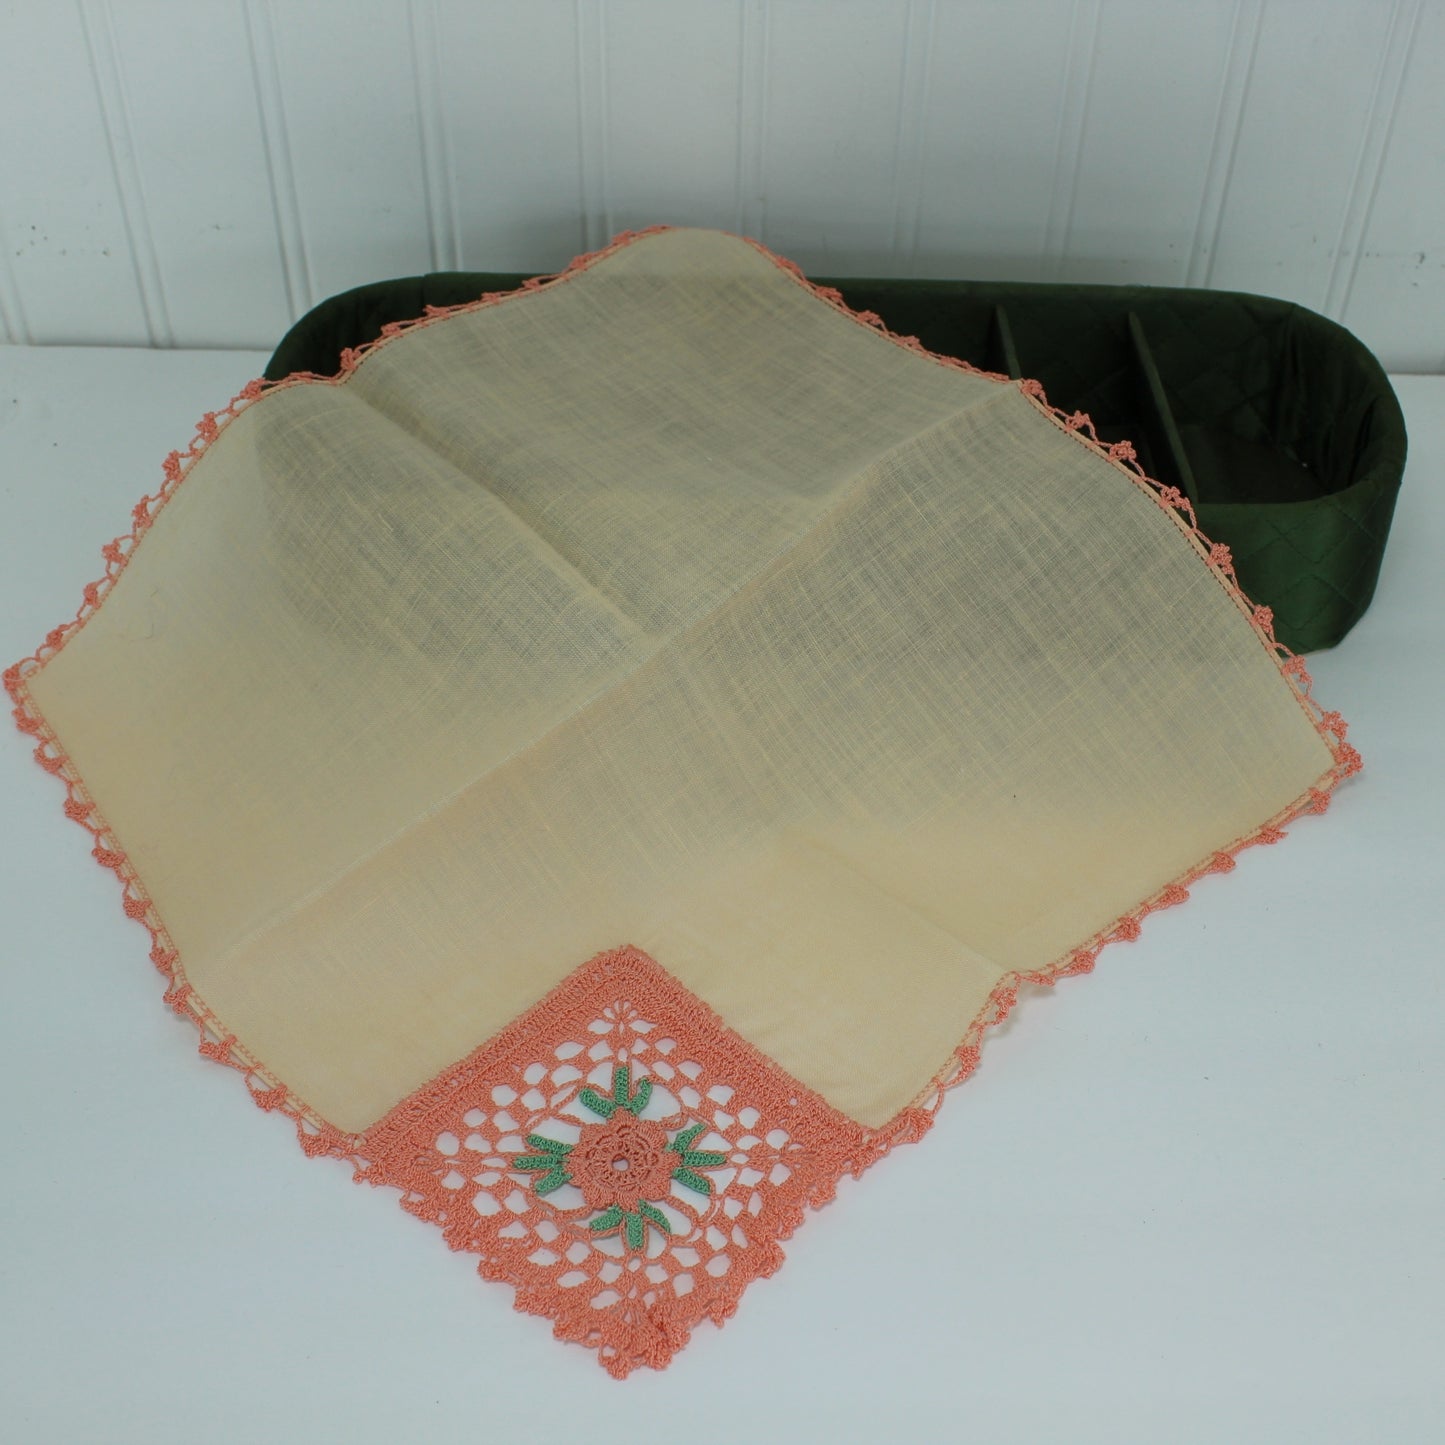 Peach Green Vintage New Linen Handkerchiefs Crochet Decor Use or DIY Clothing Repurpose Crafts lush colors matching edges